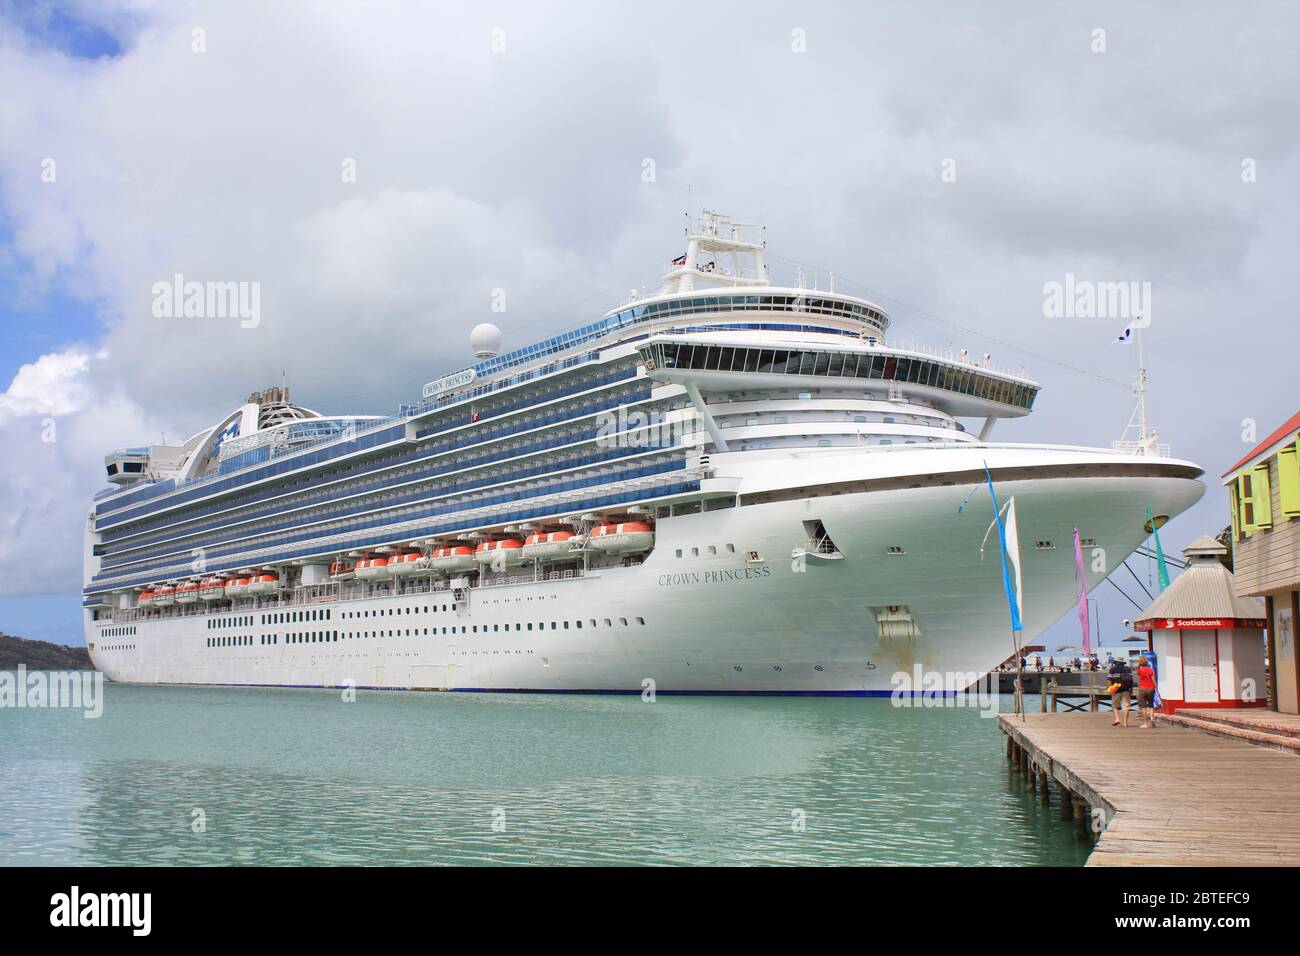 SAINT JOHN'S, ANTIGUA - FEBRUARY 19, 2014: Crown Princess cruise ship anchored in St John's, Antigua and Barbuda. Crown Princess is operated by Prince Stock Photo